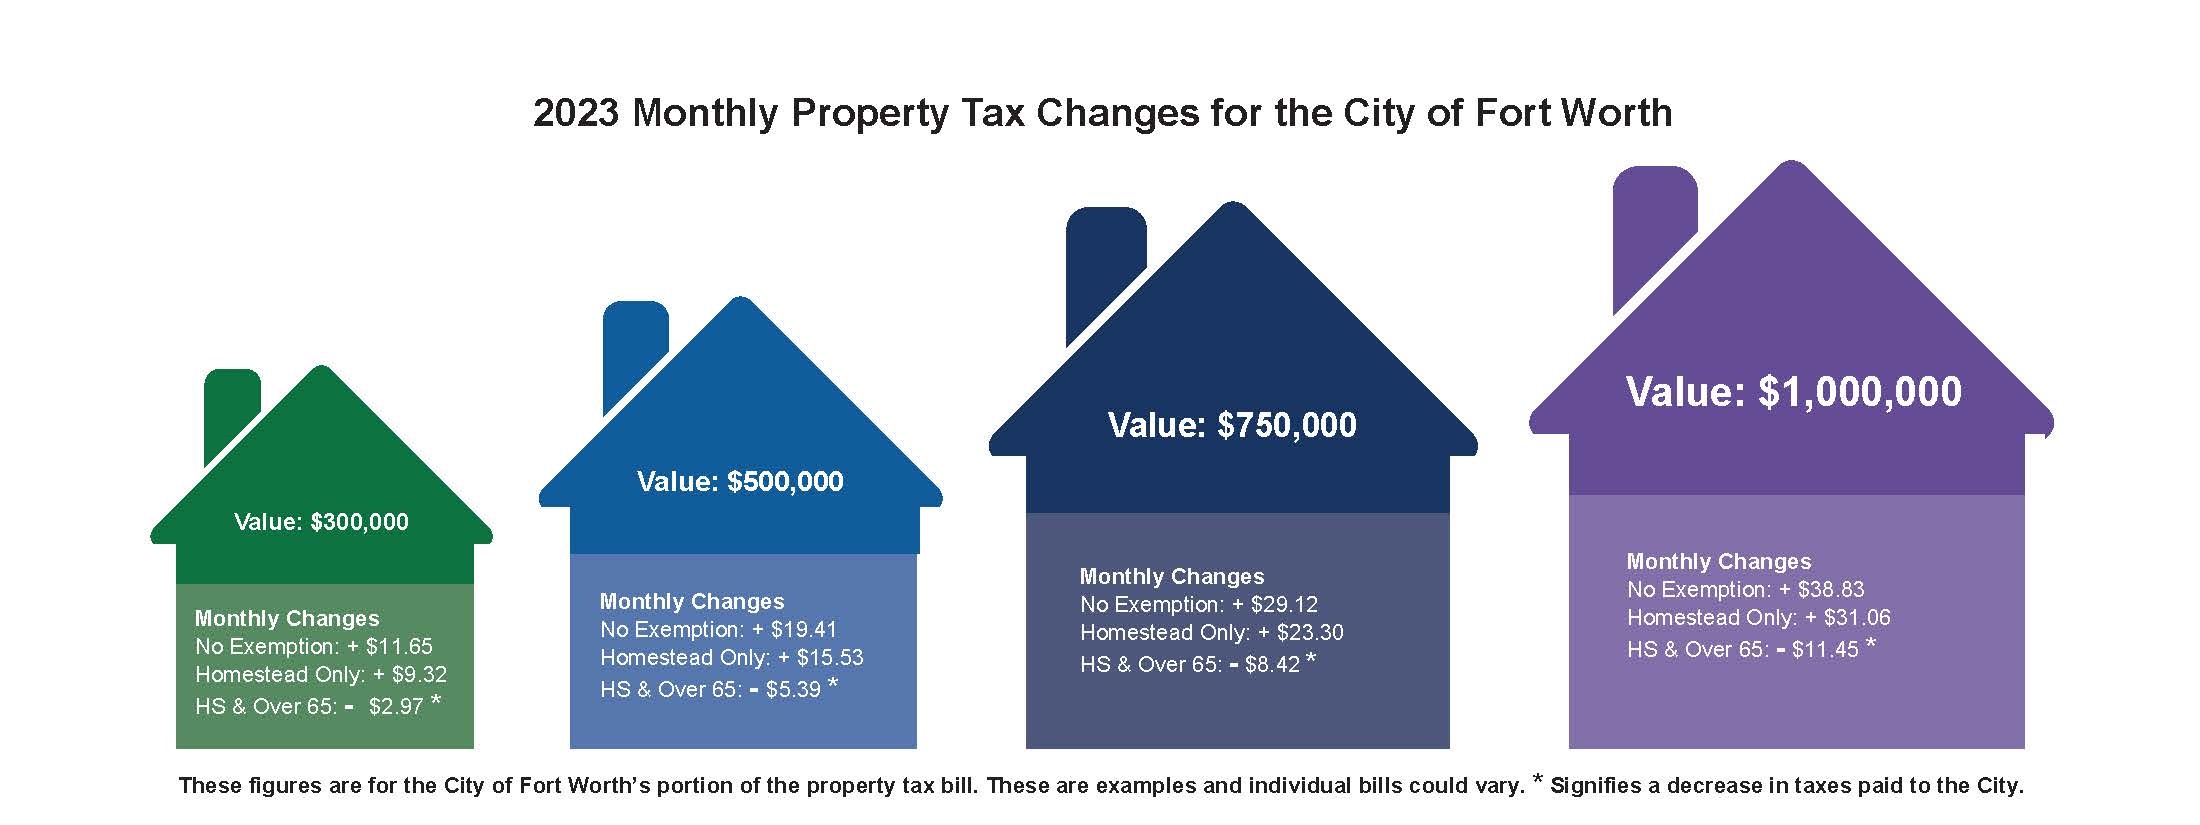 Property Tax Graphic FINAL3 (003).jpg